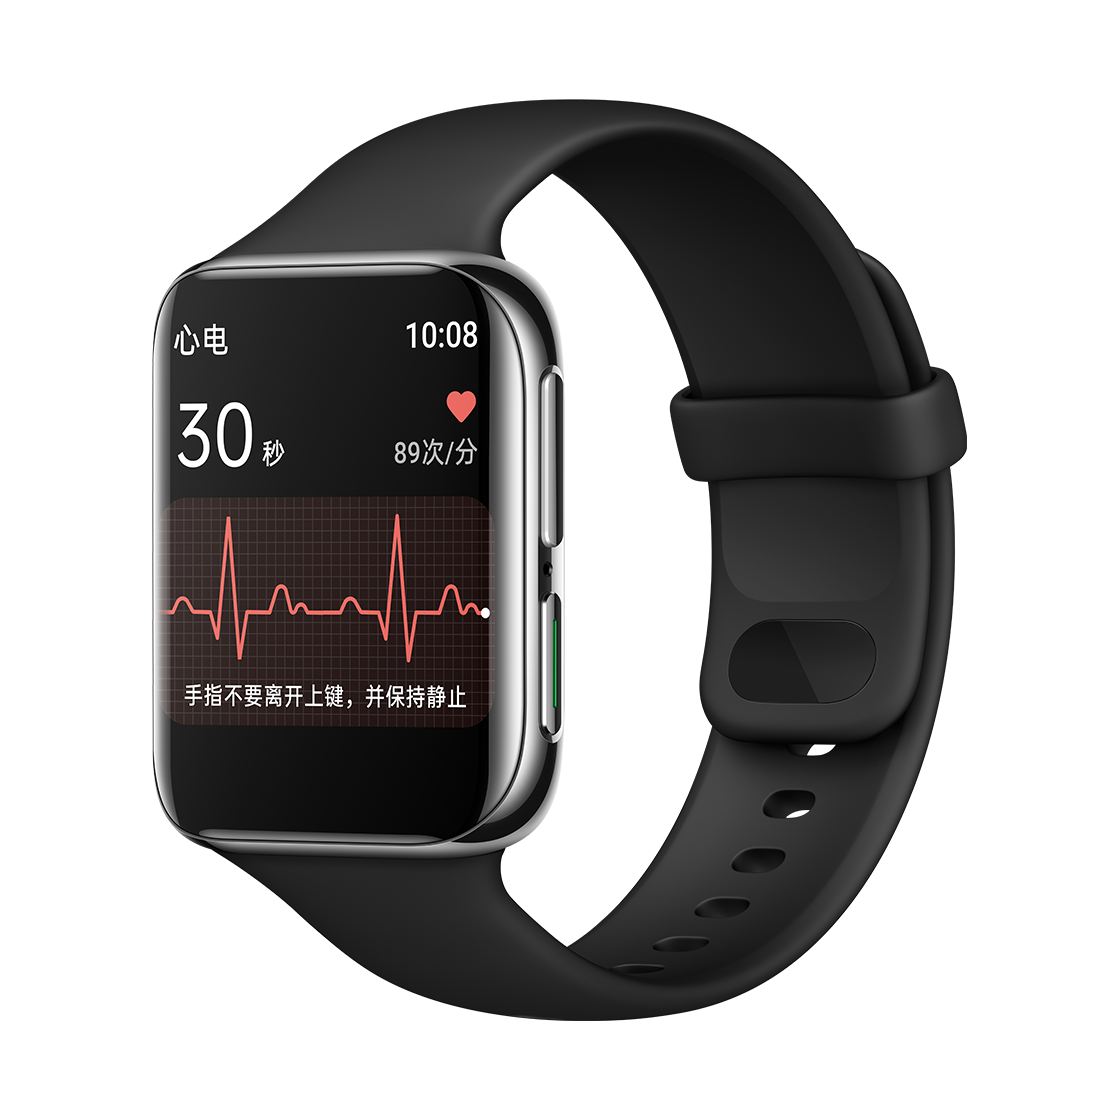 Oppo trabaja en un smartwatch con función de electrocardiograma